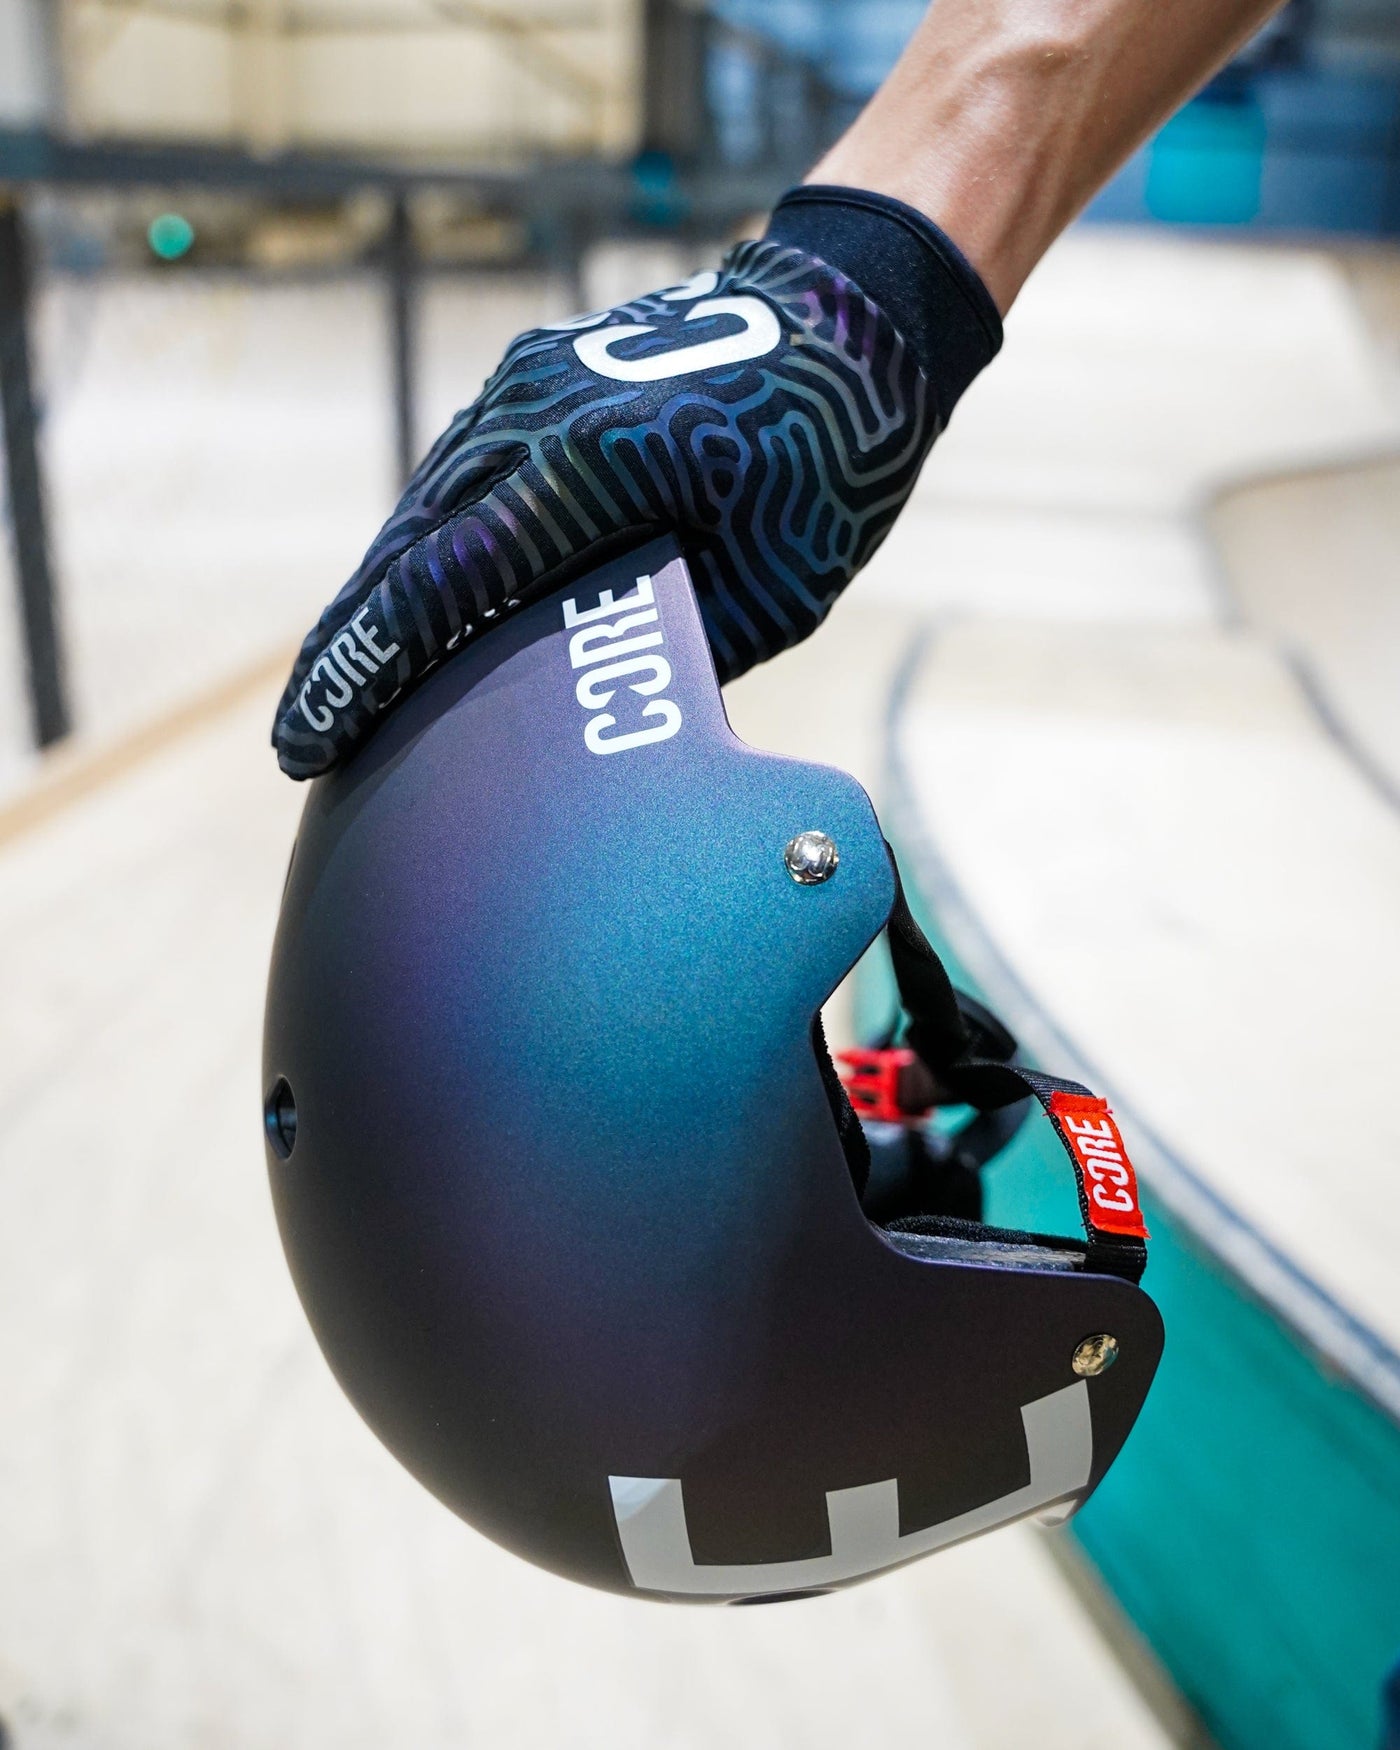 CORE Protection Aero BMX Gloves Neo Chrome I Bike Gloves Holding Helmet